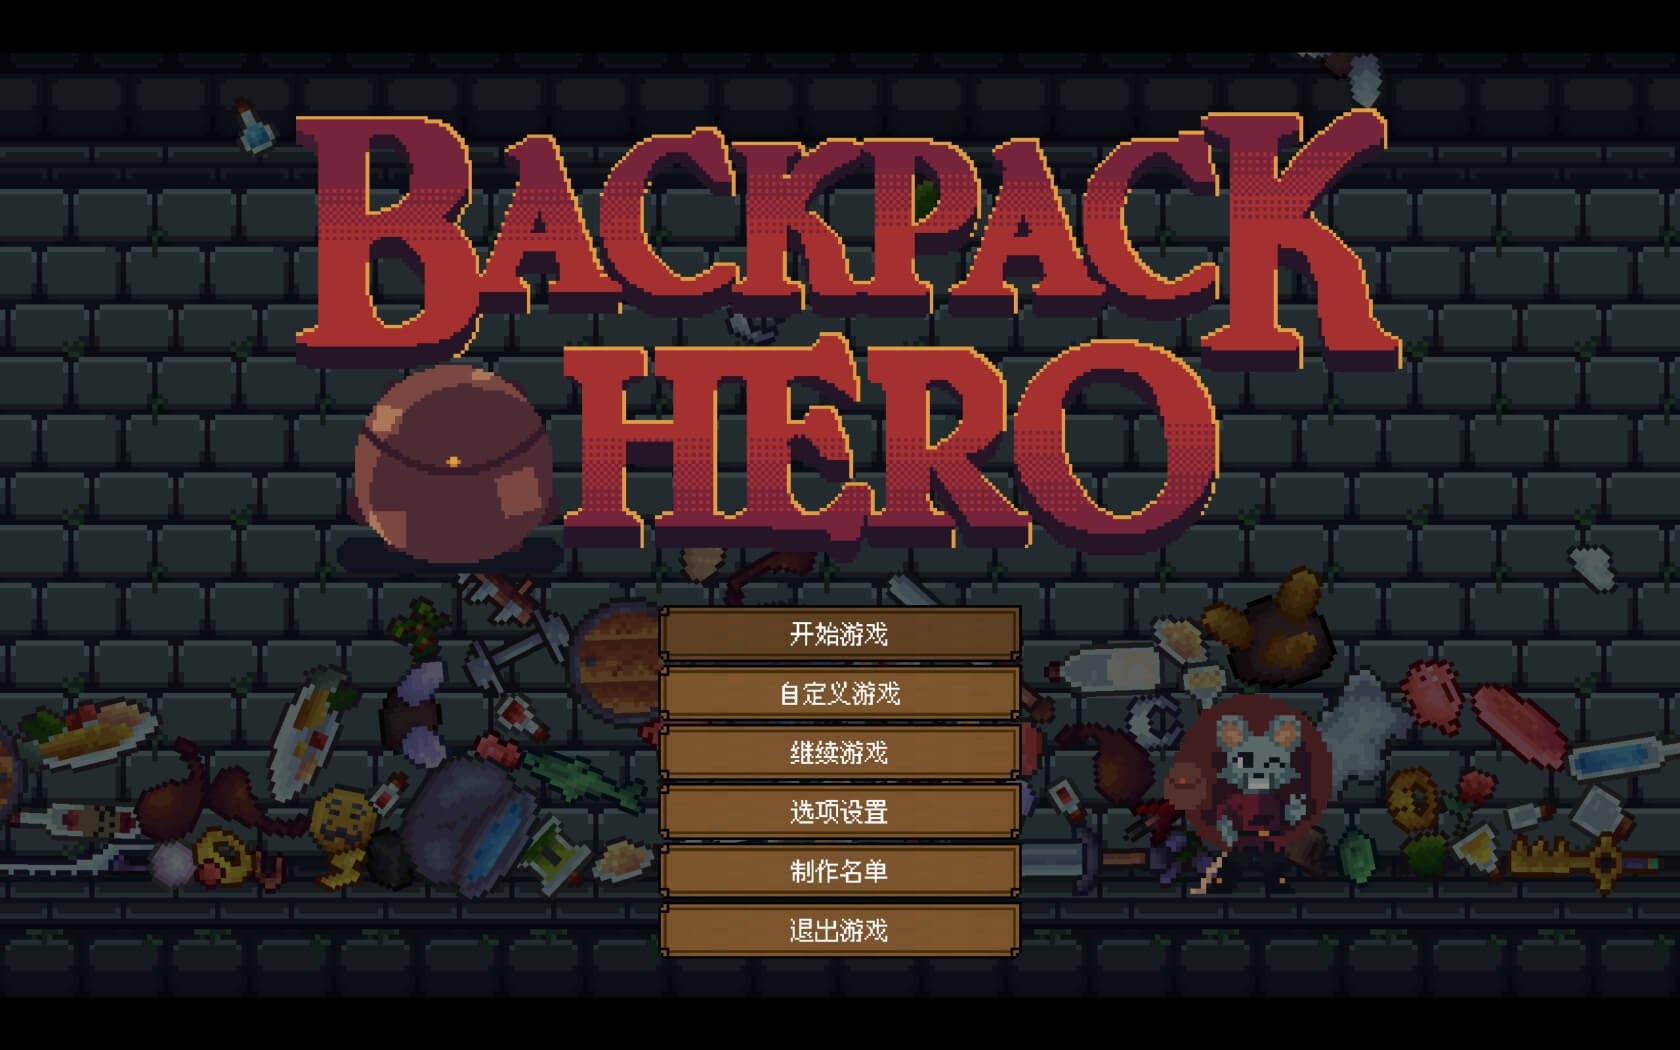 背包英雄 for Mac v1.0.907.1 Backpack Hero 中文原生版 苹果电脑